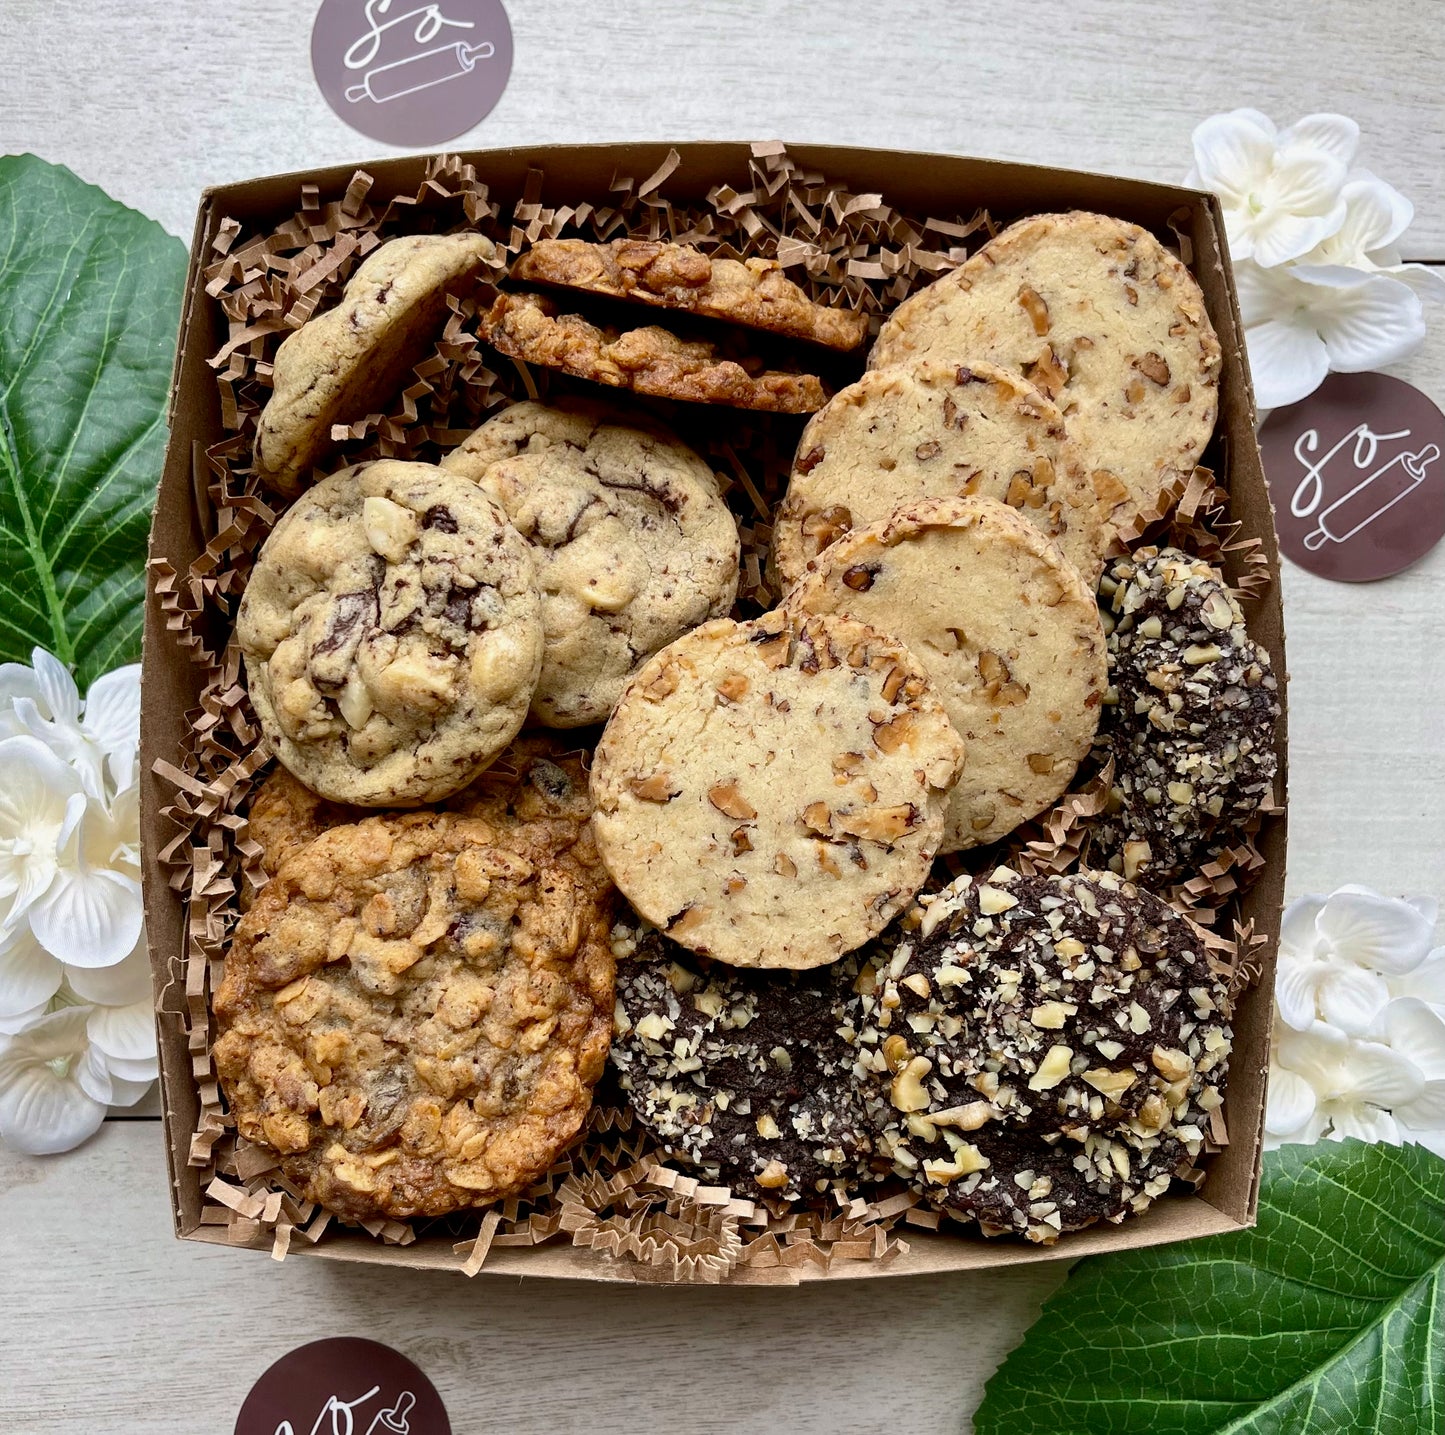 Assorted cookie gift box with maple pecan shortbread, double chocolate macadamia cookies, oatmeal raisin pecan cookies, and chocolate walnut cherry cookies.